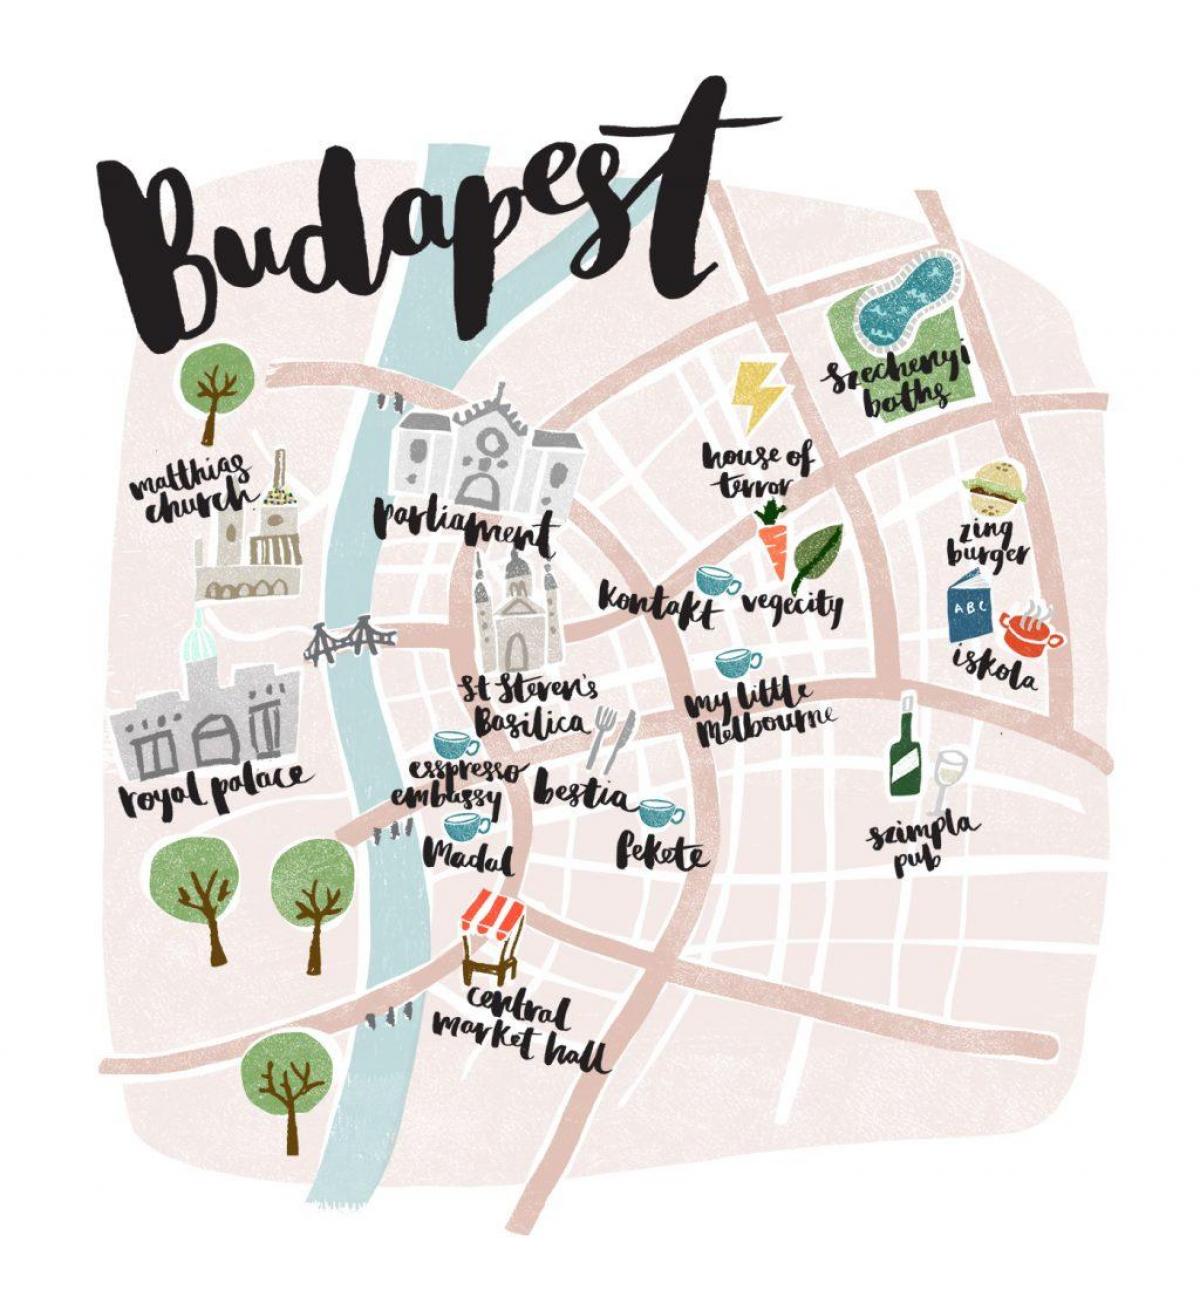 बुडापेस्ट के ऑफ़लाइन मानचित्र.